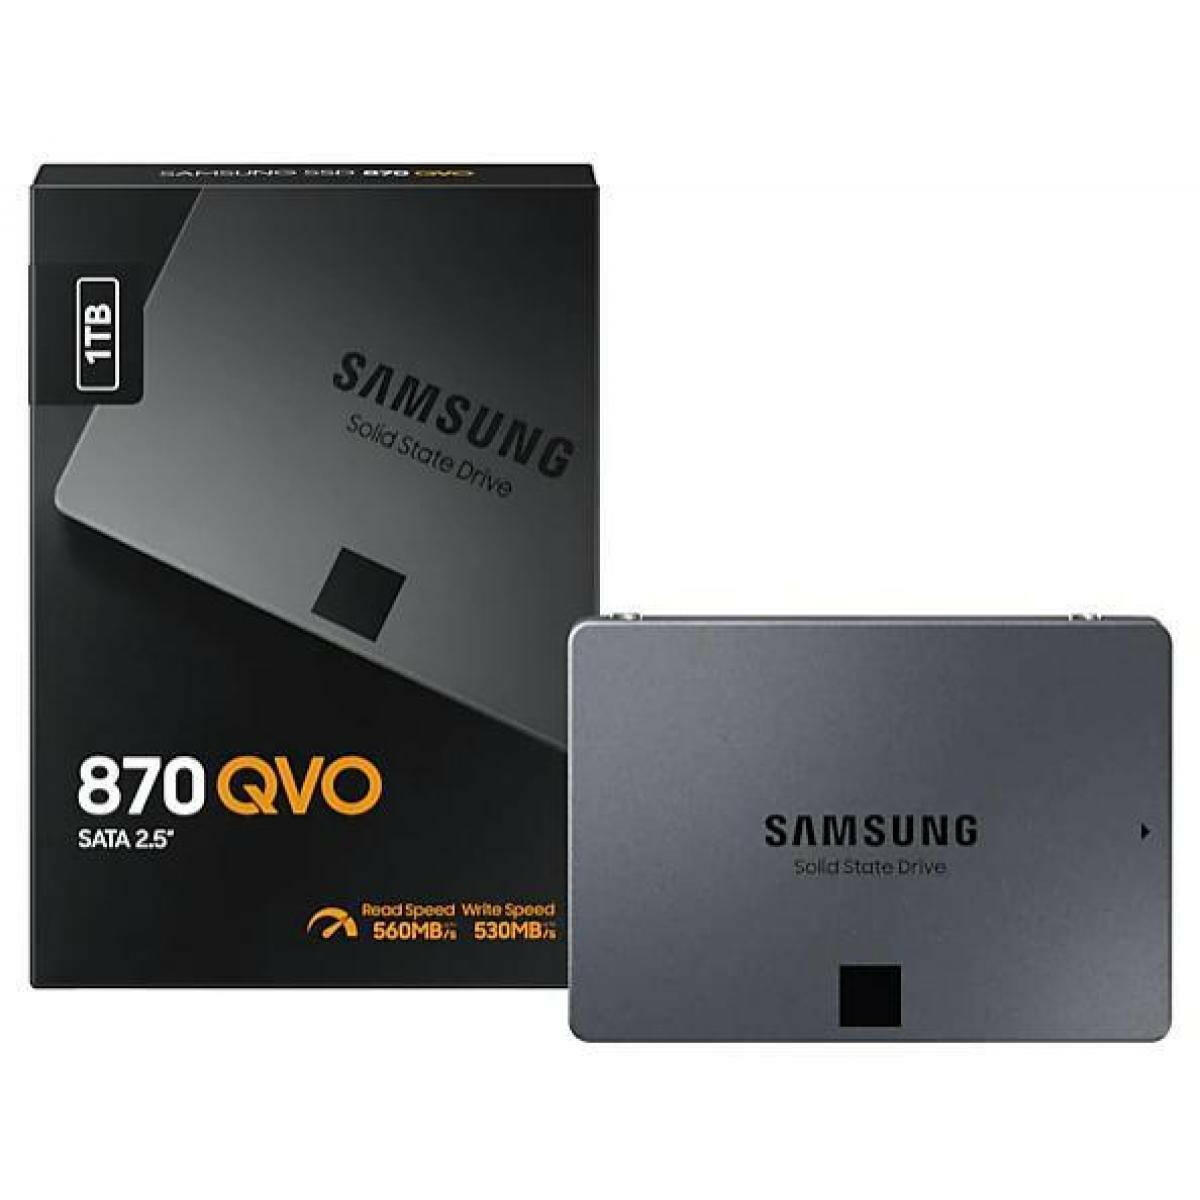 SAMSUNG Solid State Drive Samsung SSD 870 QVO 1TB, Form Factor 2.5”, Intelligent Turbo Write,V-NAND reliability Latest 4-bit MLC technology, Black